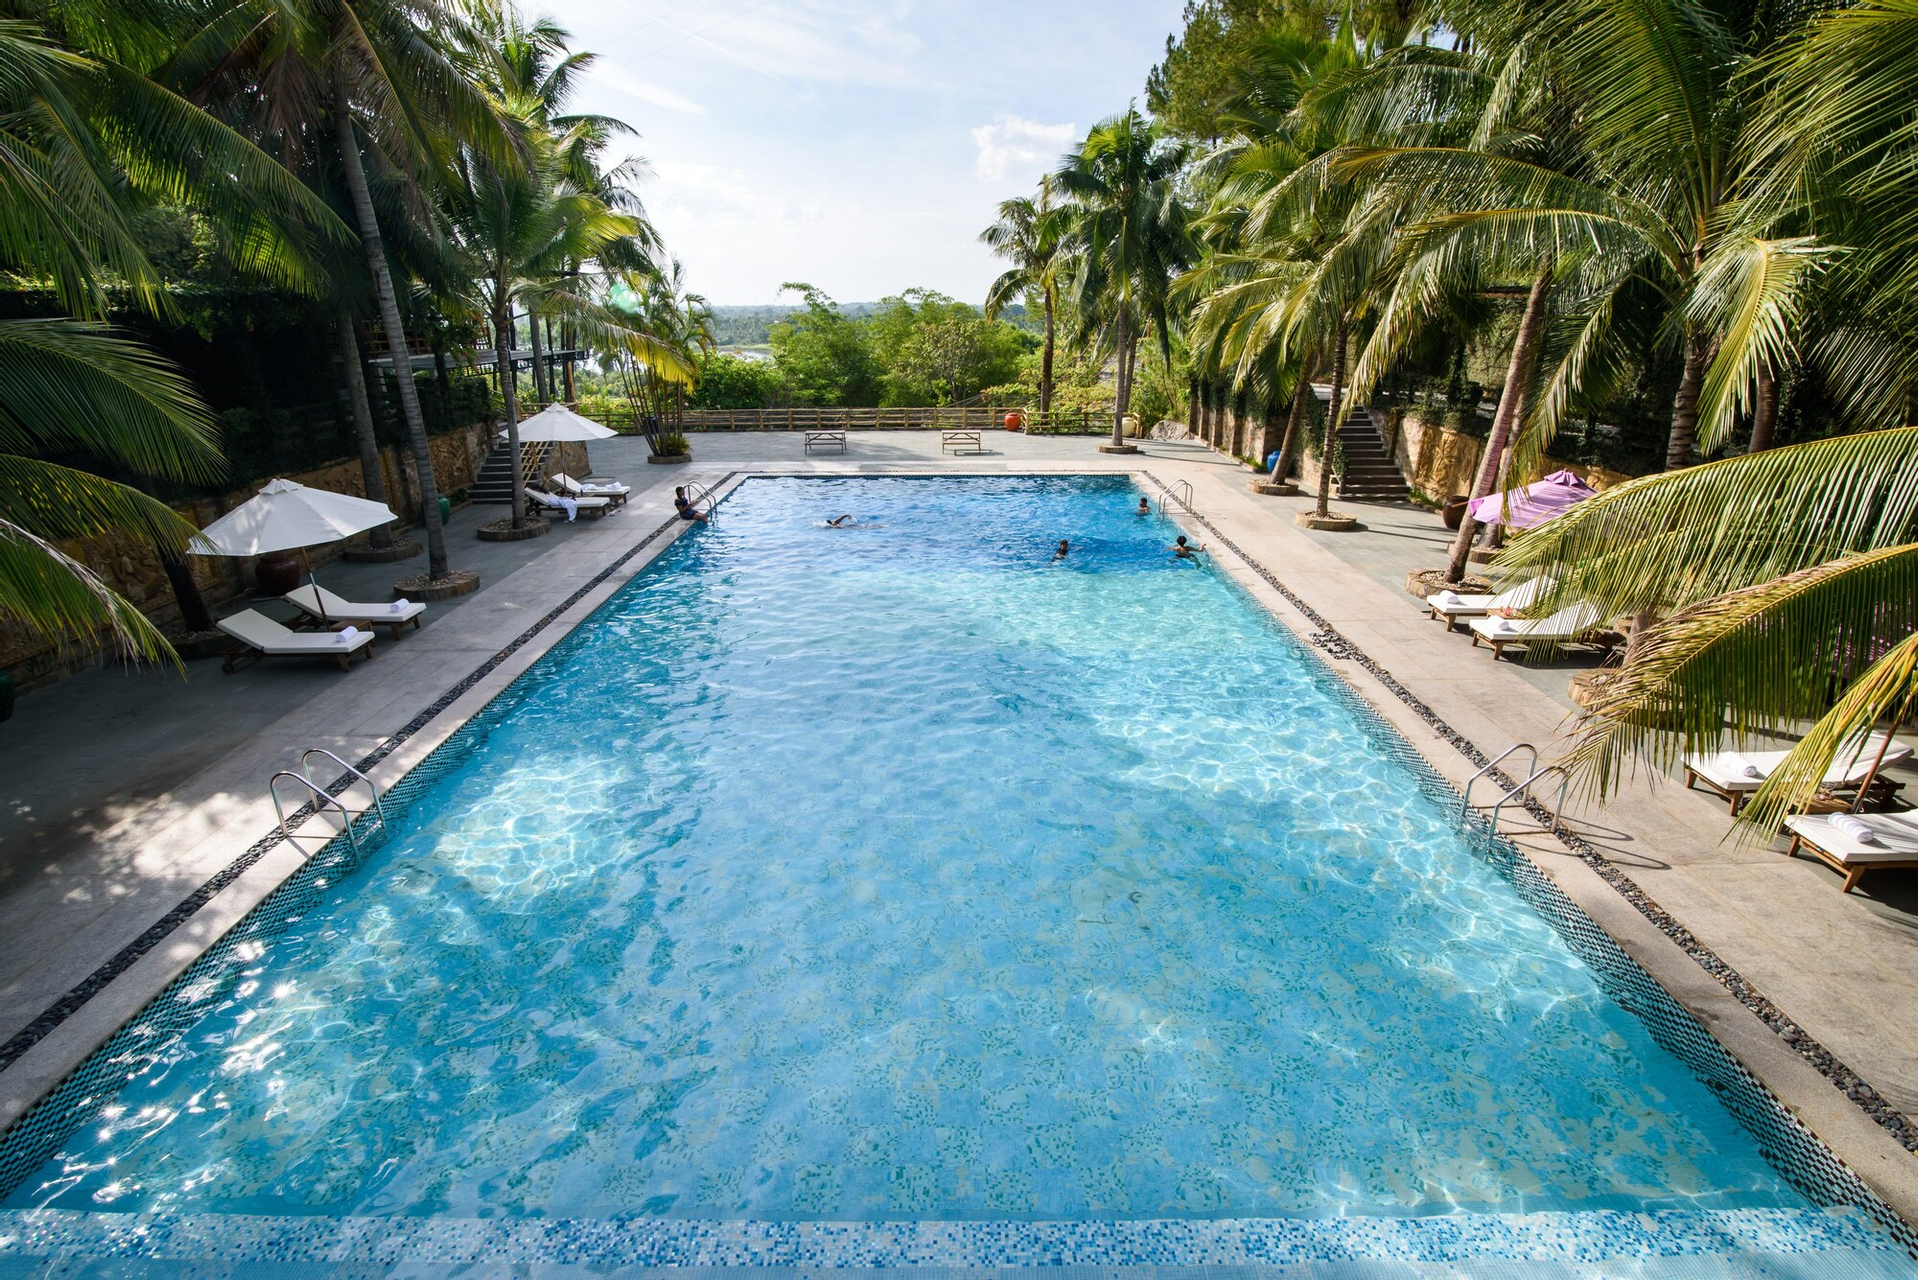 Outdoor pool 1, Sankofa Village Hill resort and Spa, Hương Trà